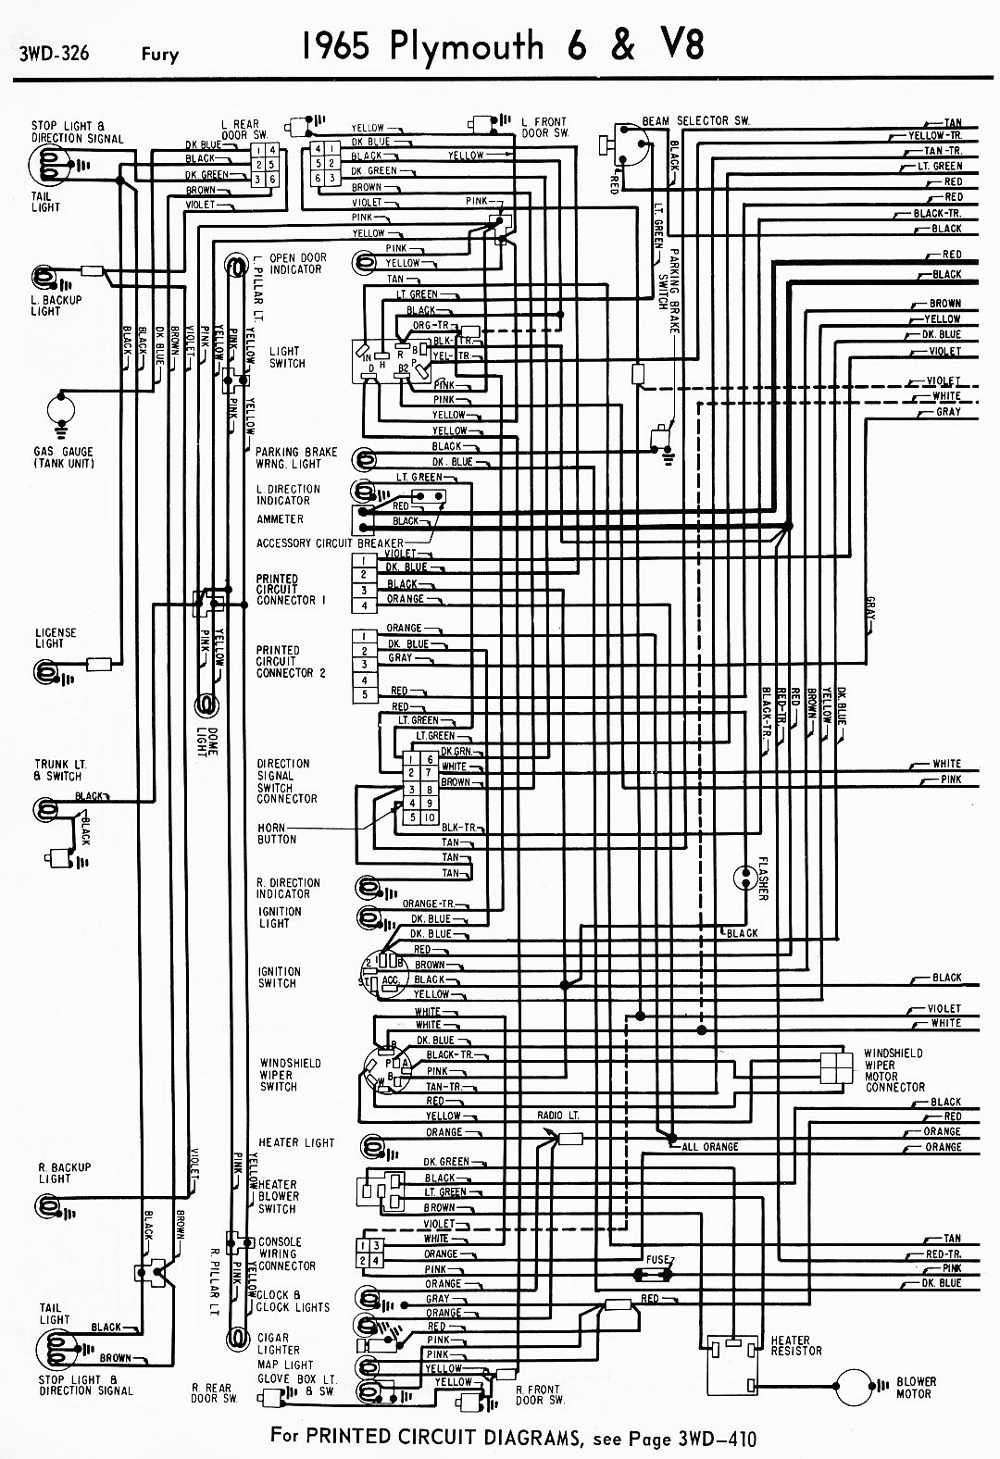 Wiring Diagram For 1966 Fury - Complete Wiring Schemas